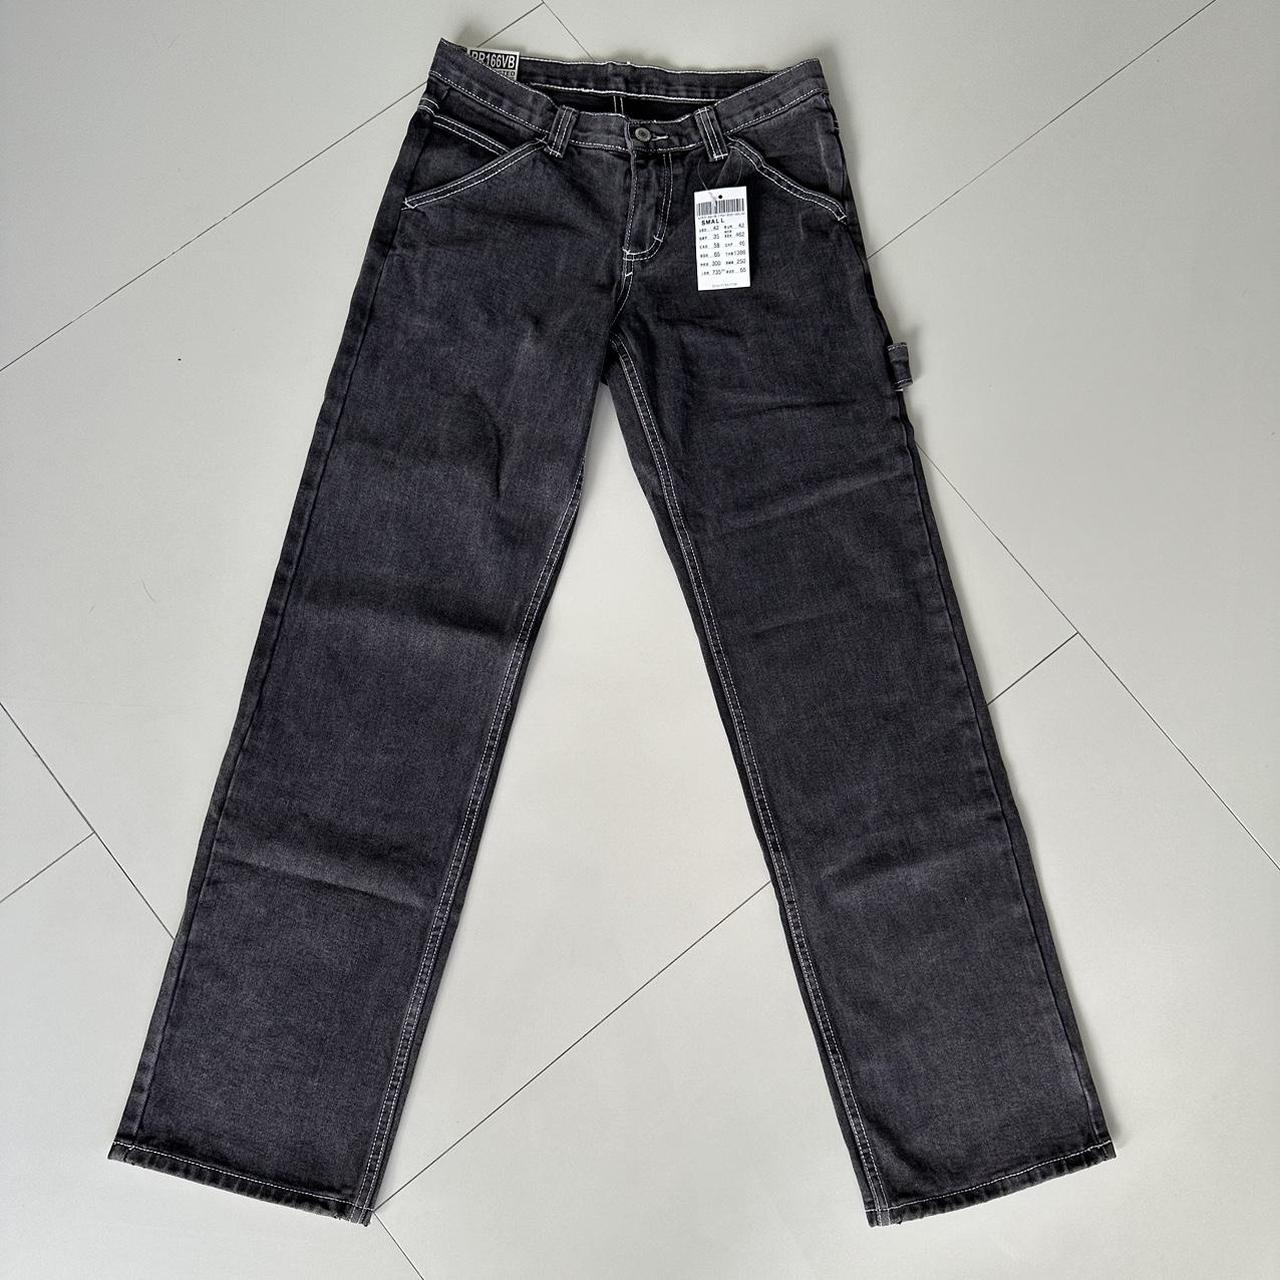 Brandy Melville Black Jeans! Original Price: $42... - Depop